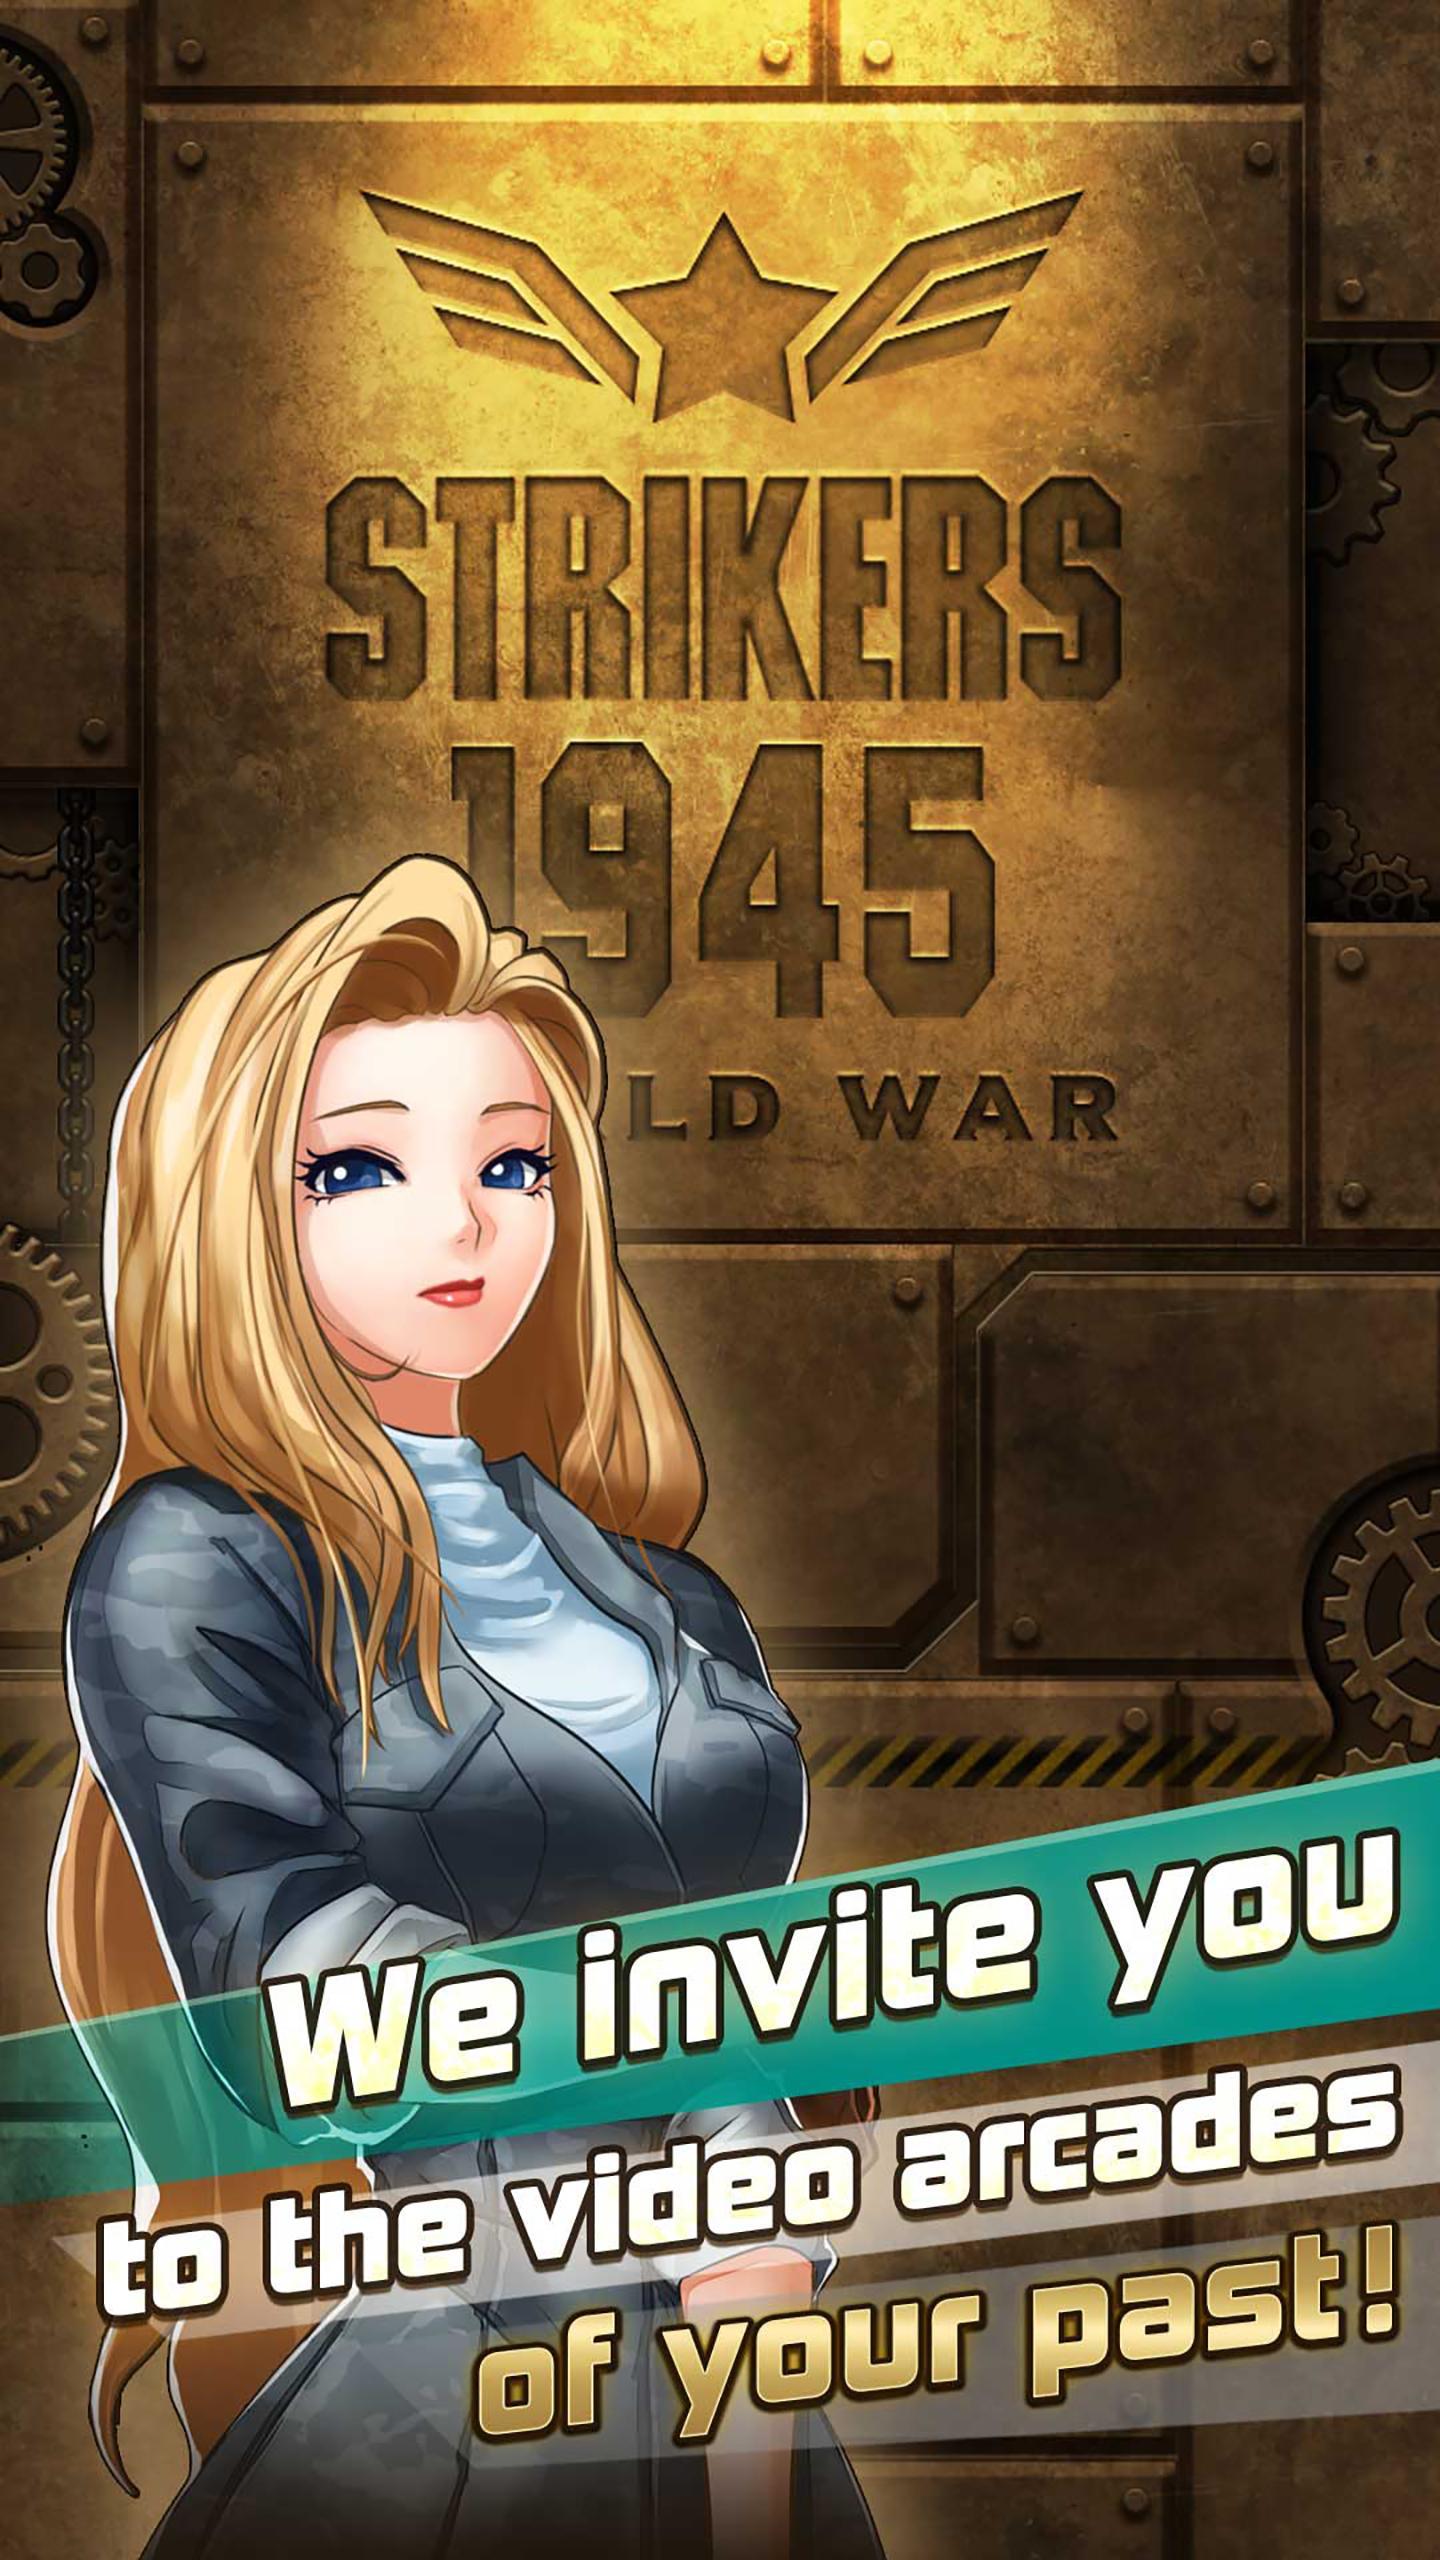 STRIKERS 1945 World War M screenshot game